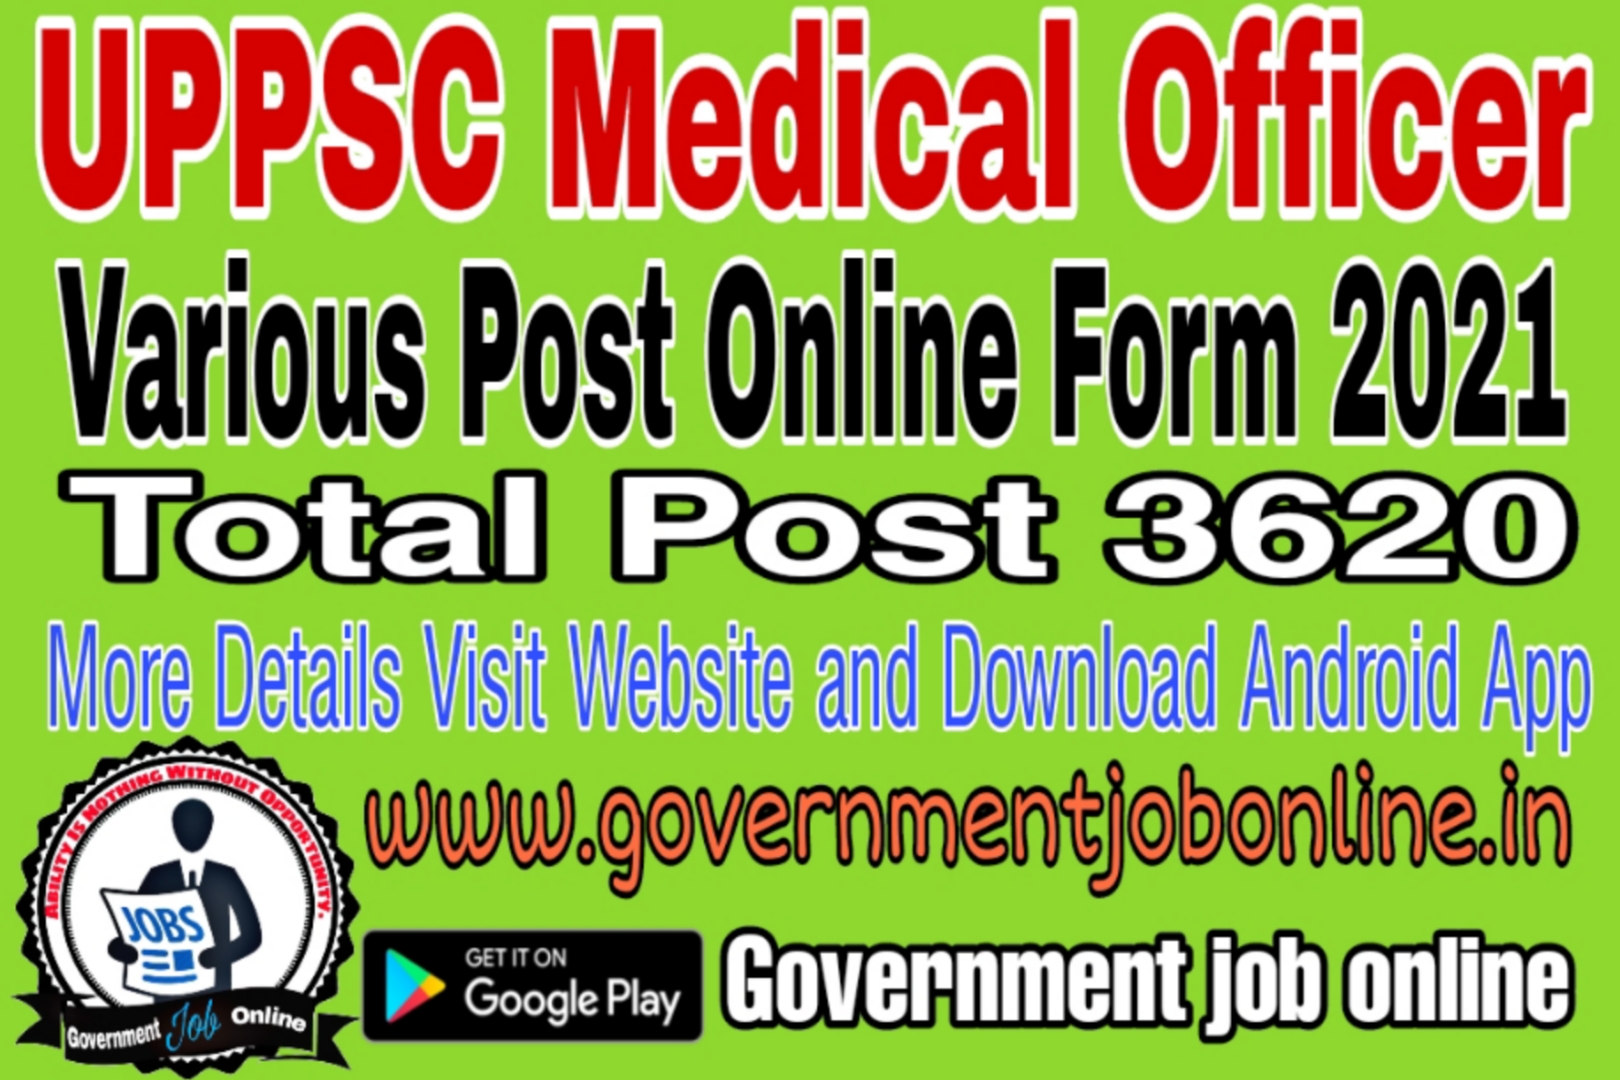 UPPSC Medical Officer Various Post Online Form 2021